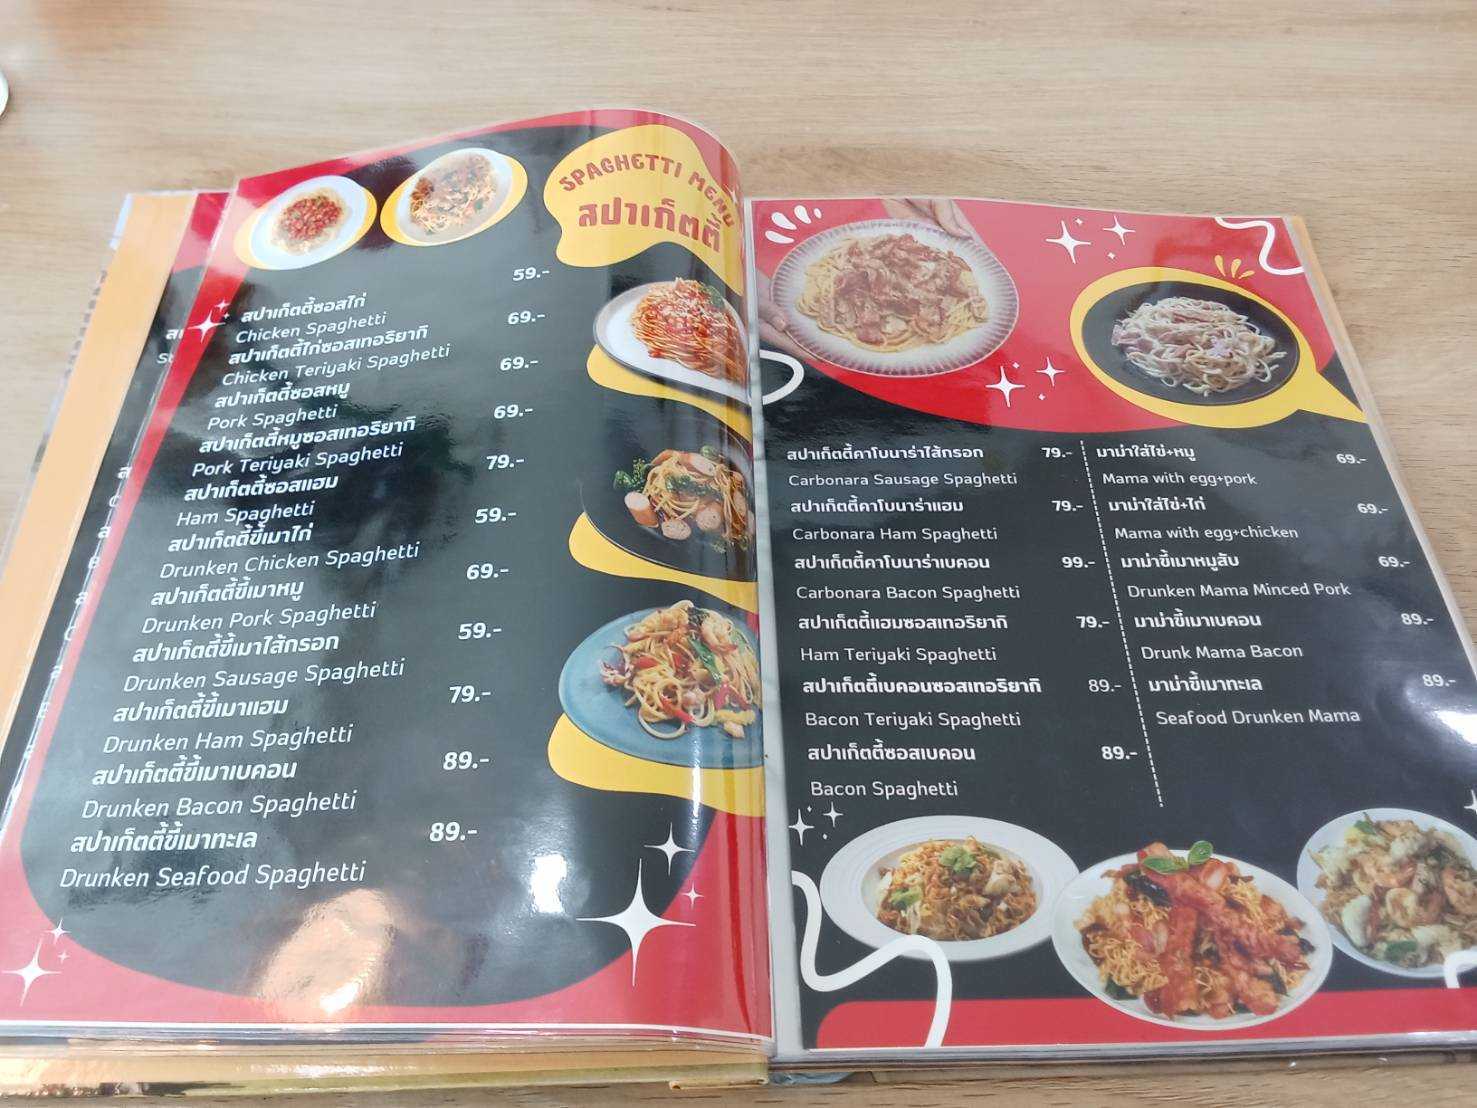 Bangkok-Focus Cafe Ayutthaya, a review of a new budget restaurant on Ayutthaya Island